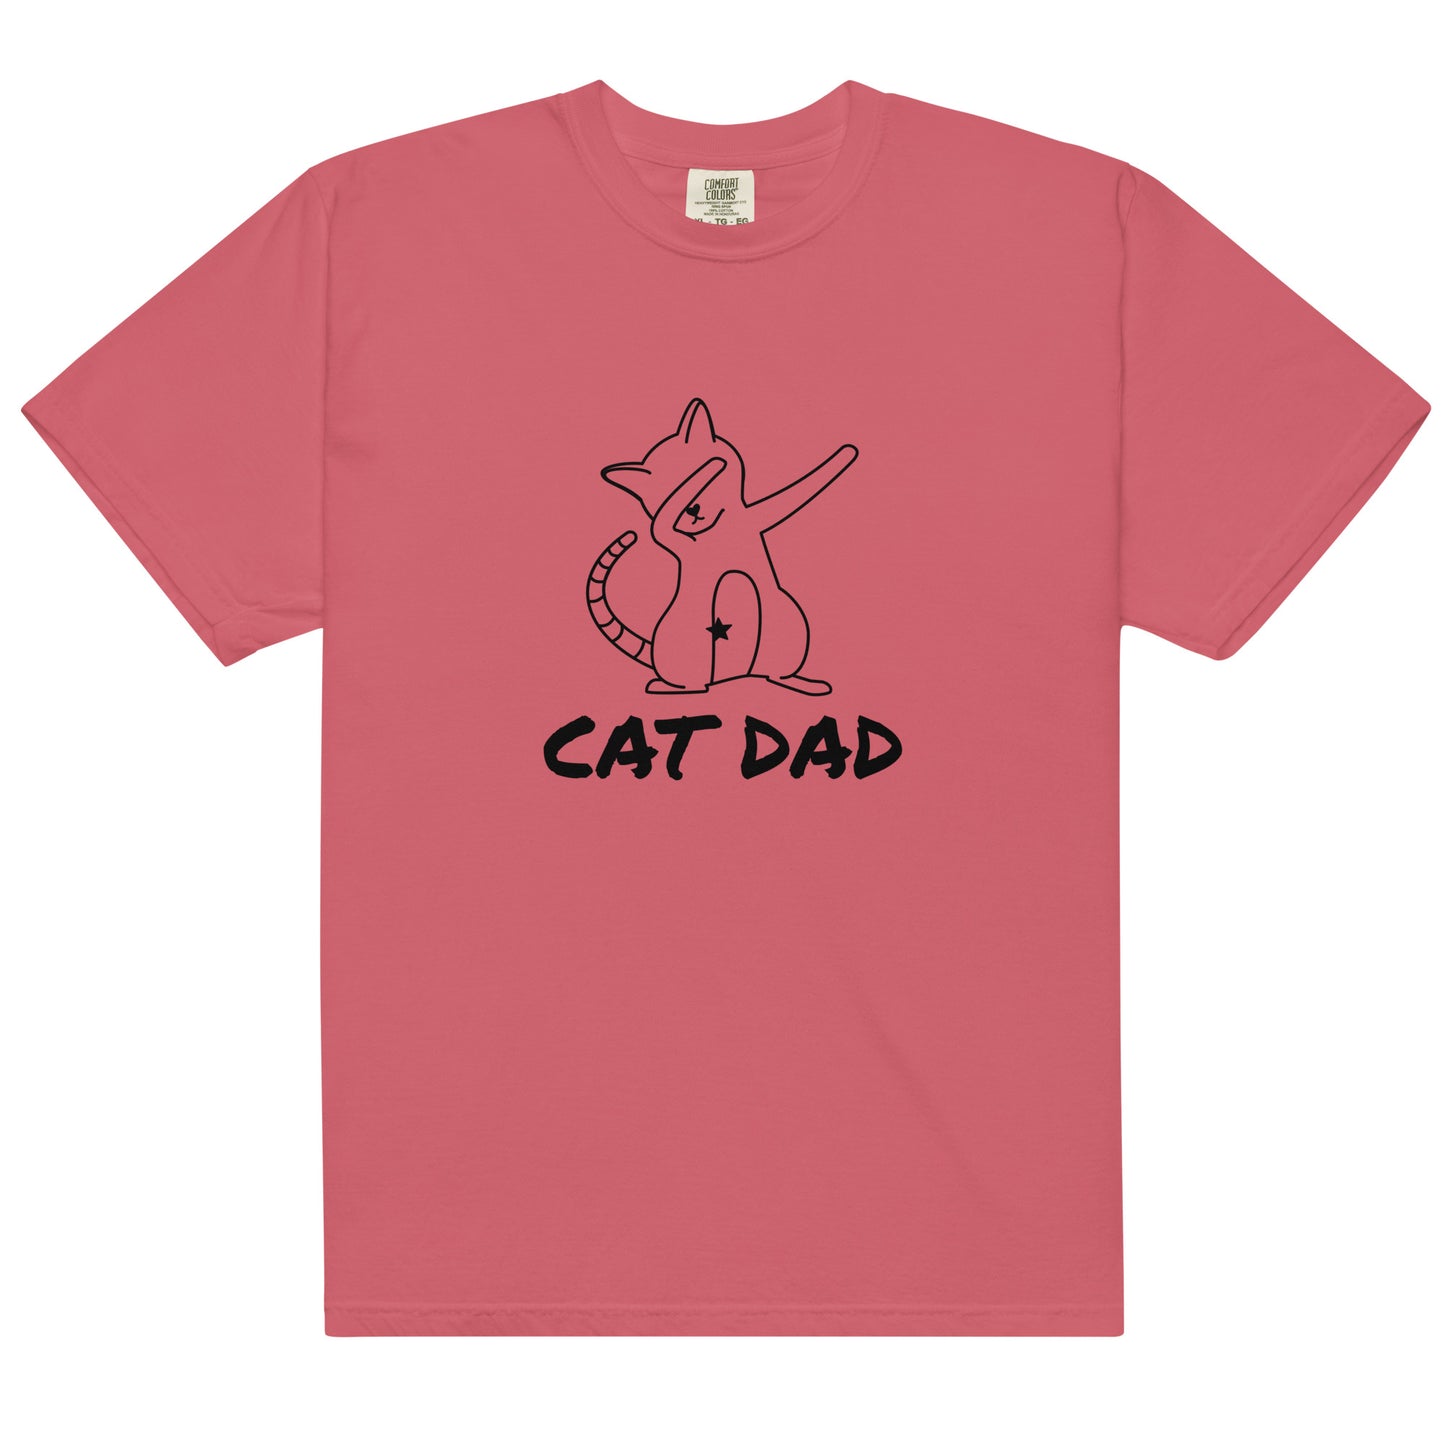 Cat Dad Printed Tshirt